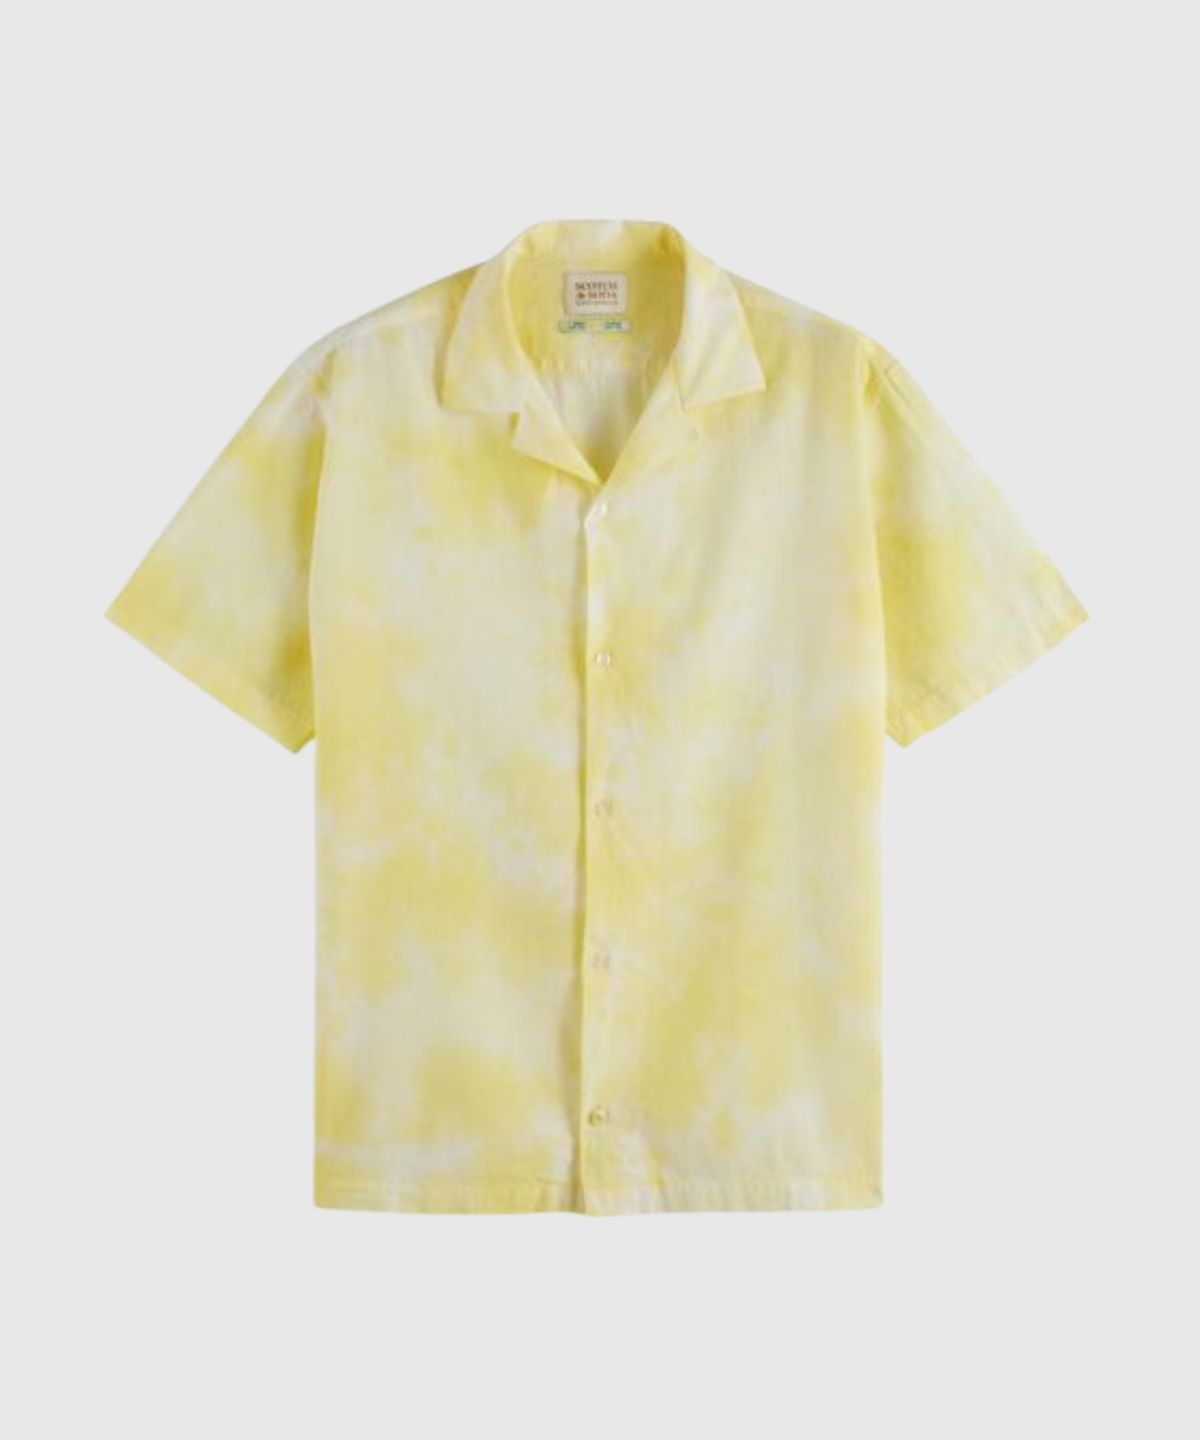 Detailed Tie-dyed linen blend shirt